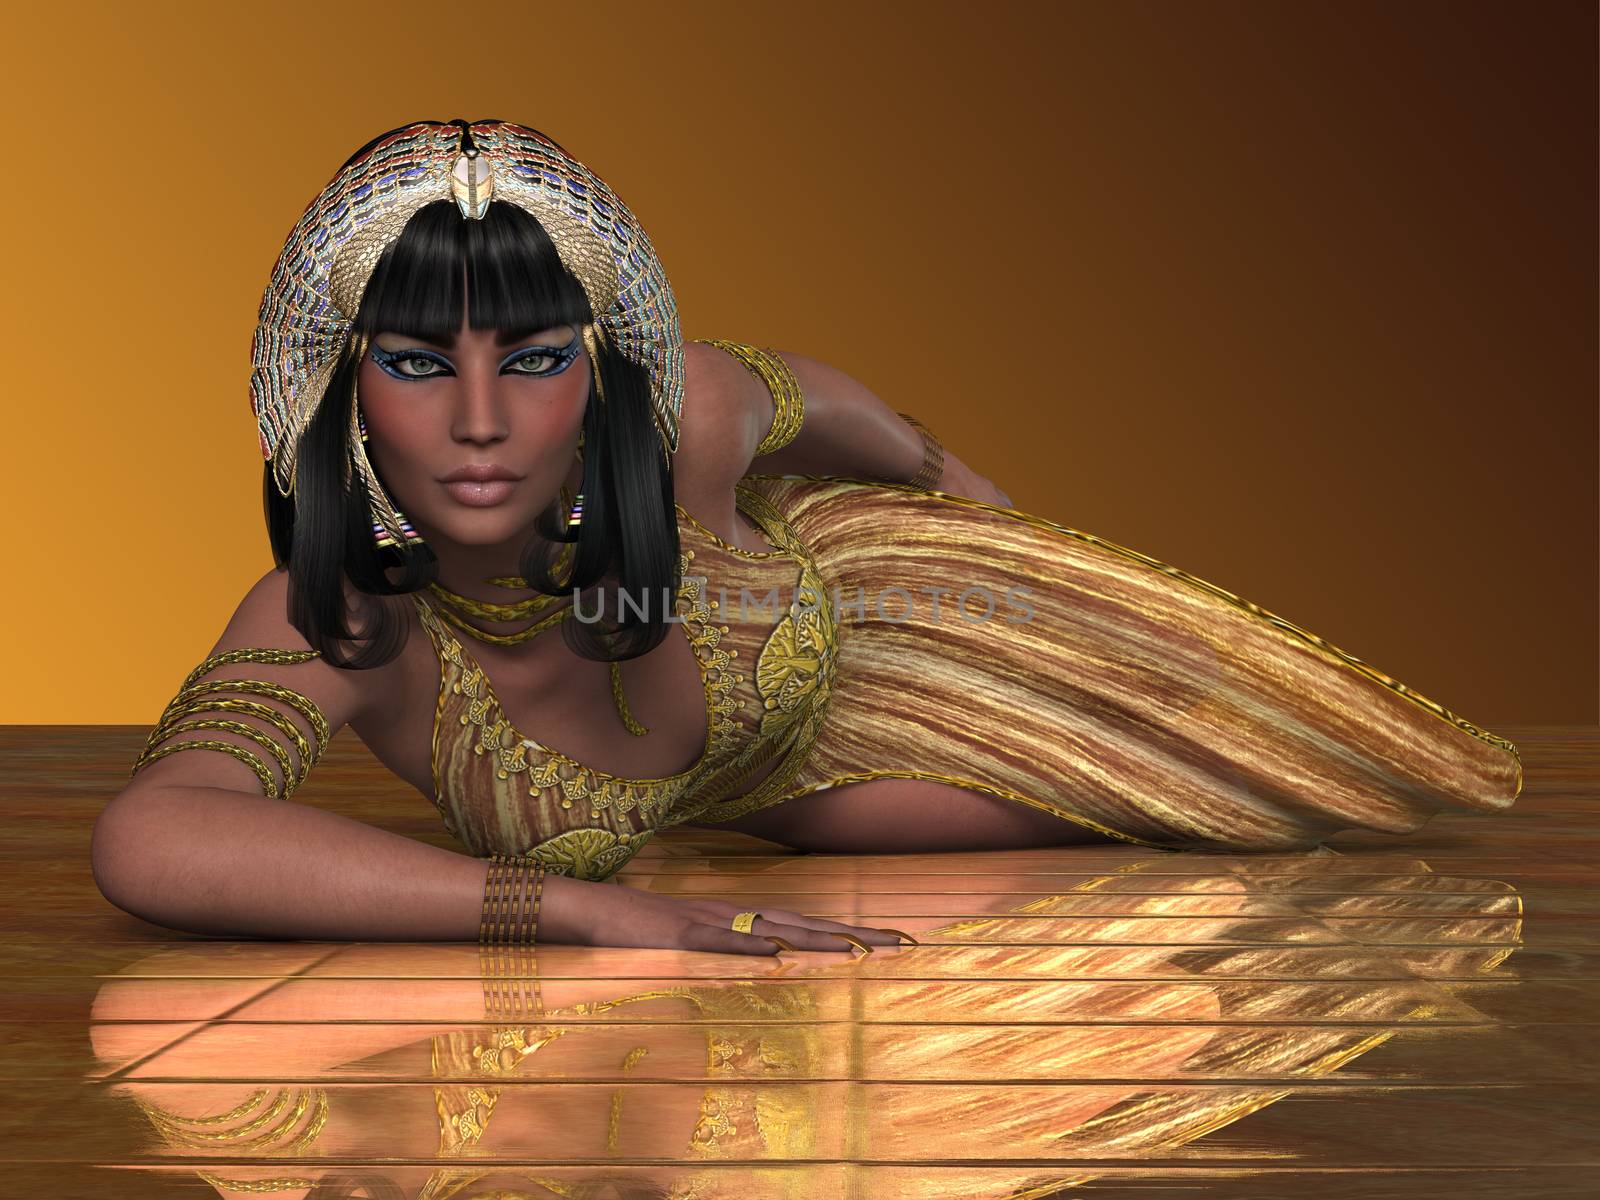 Egyptian Priestess by Catmando